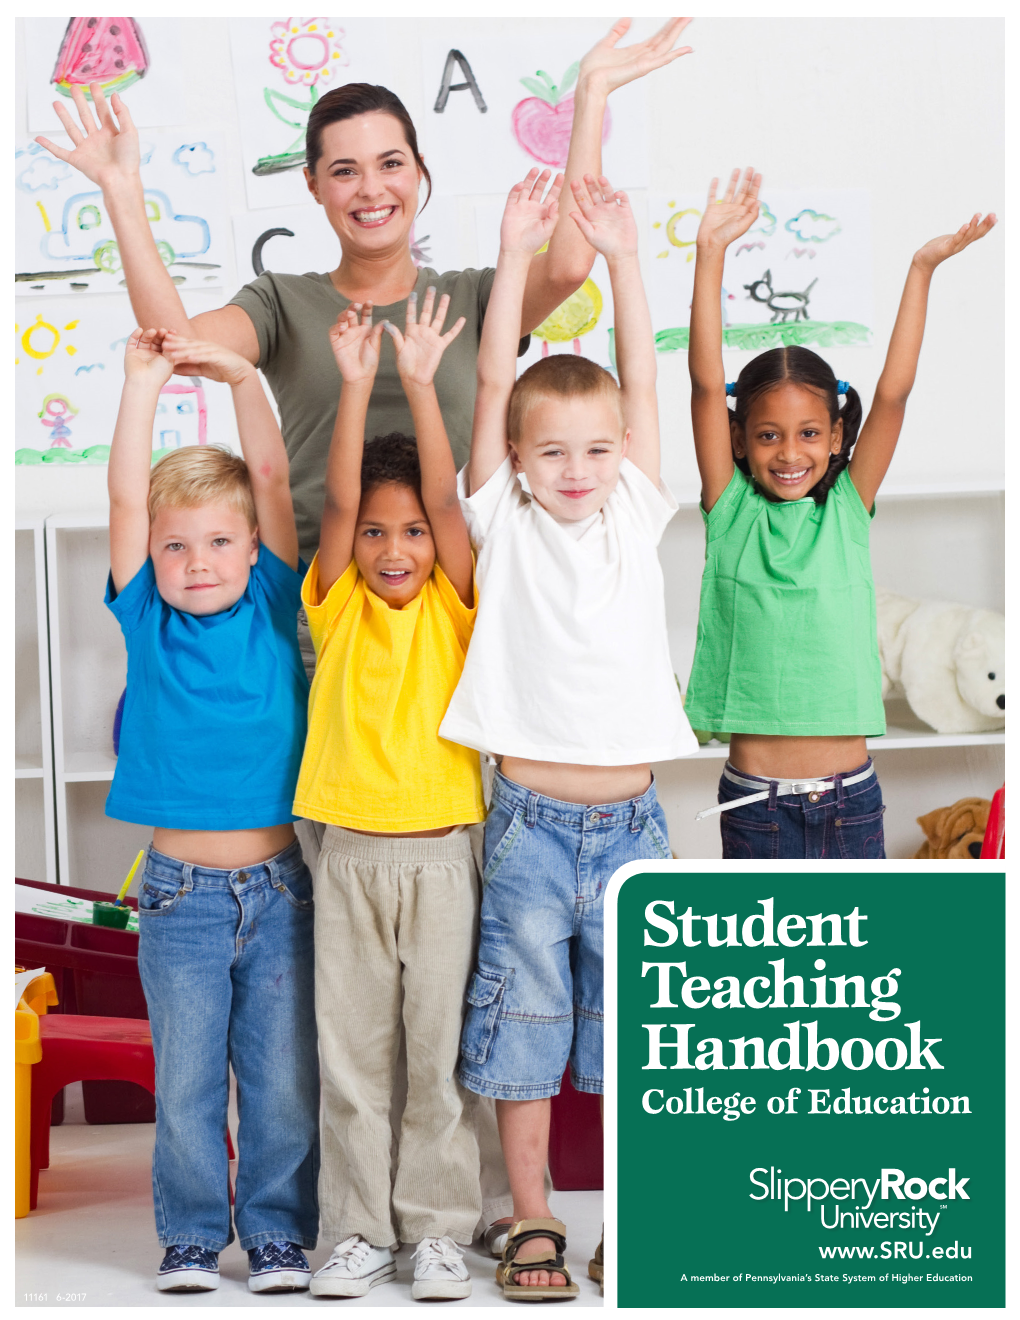 Student Teaching Handbook College of Education